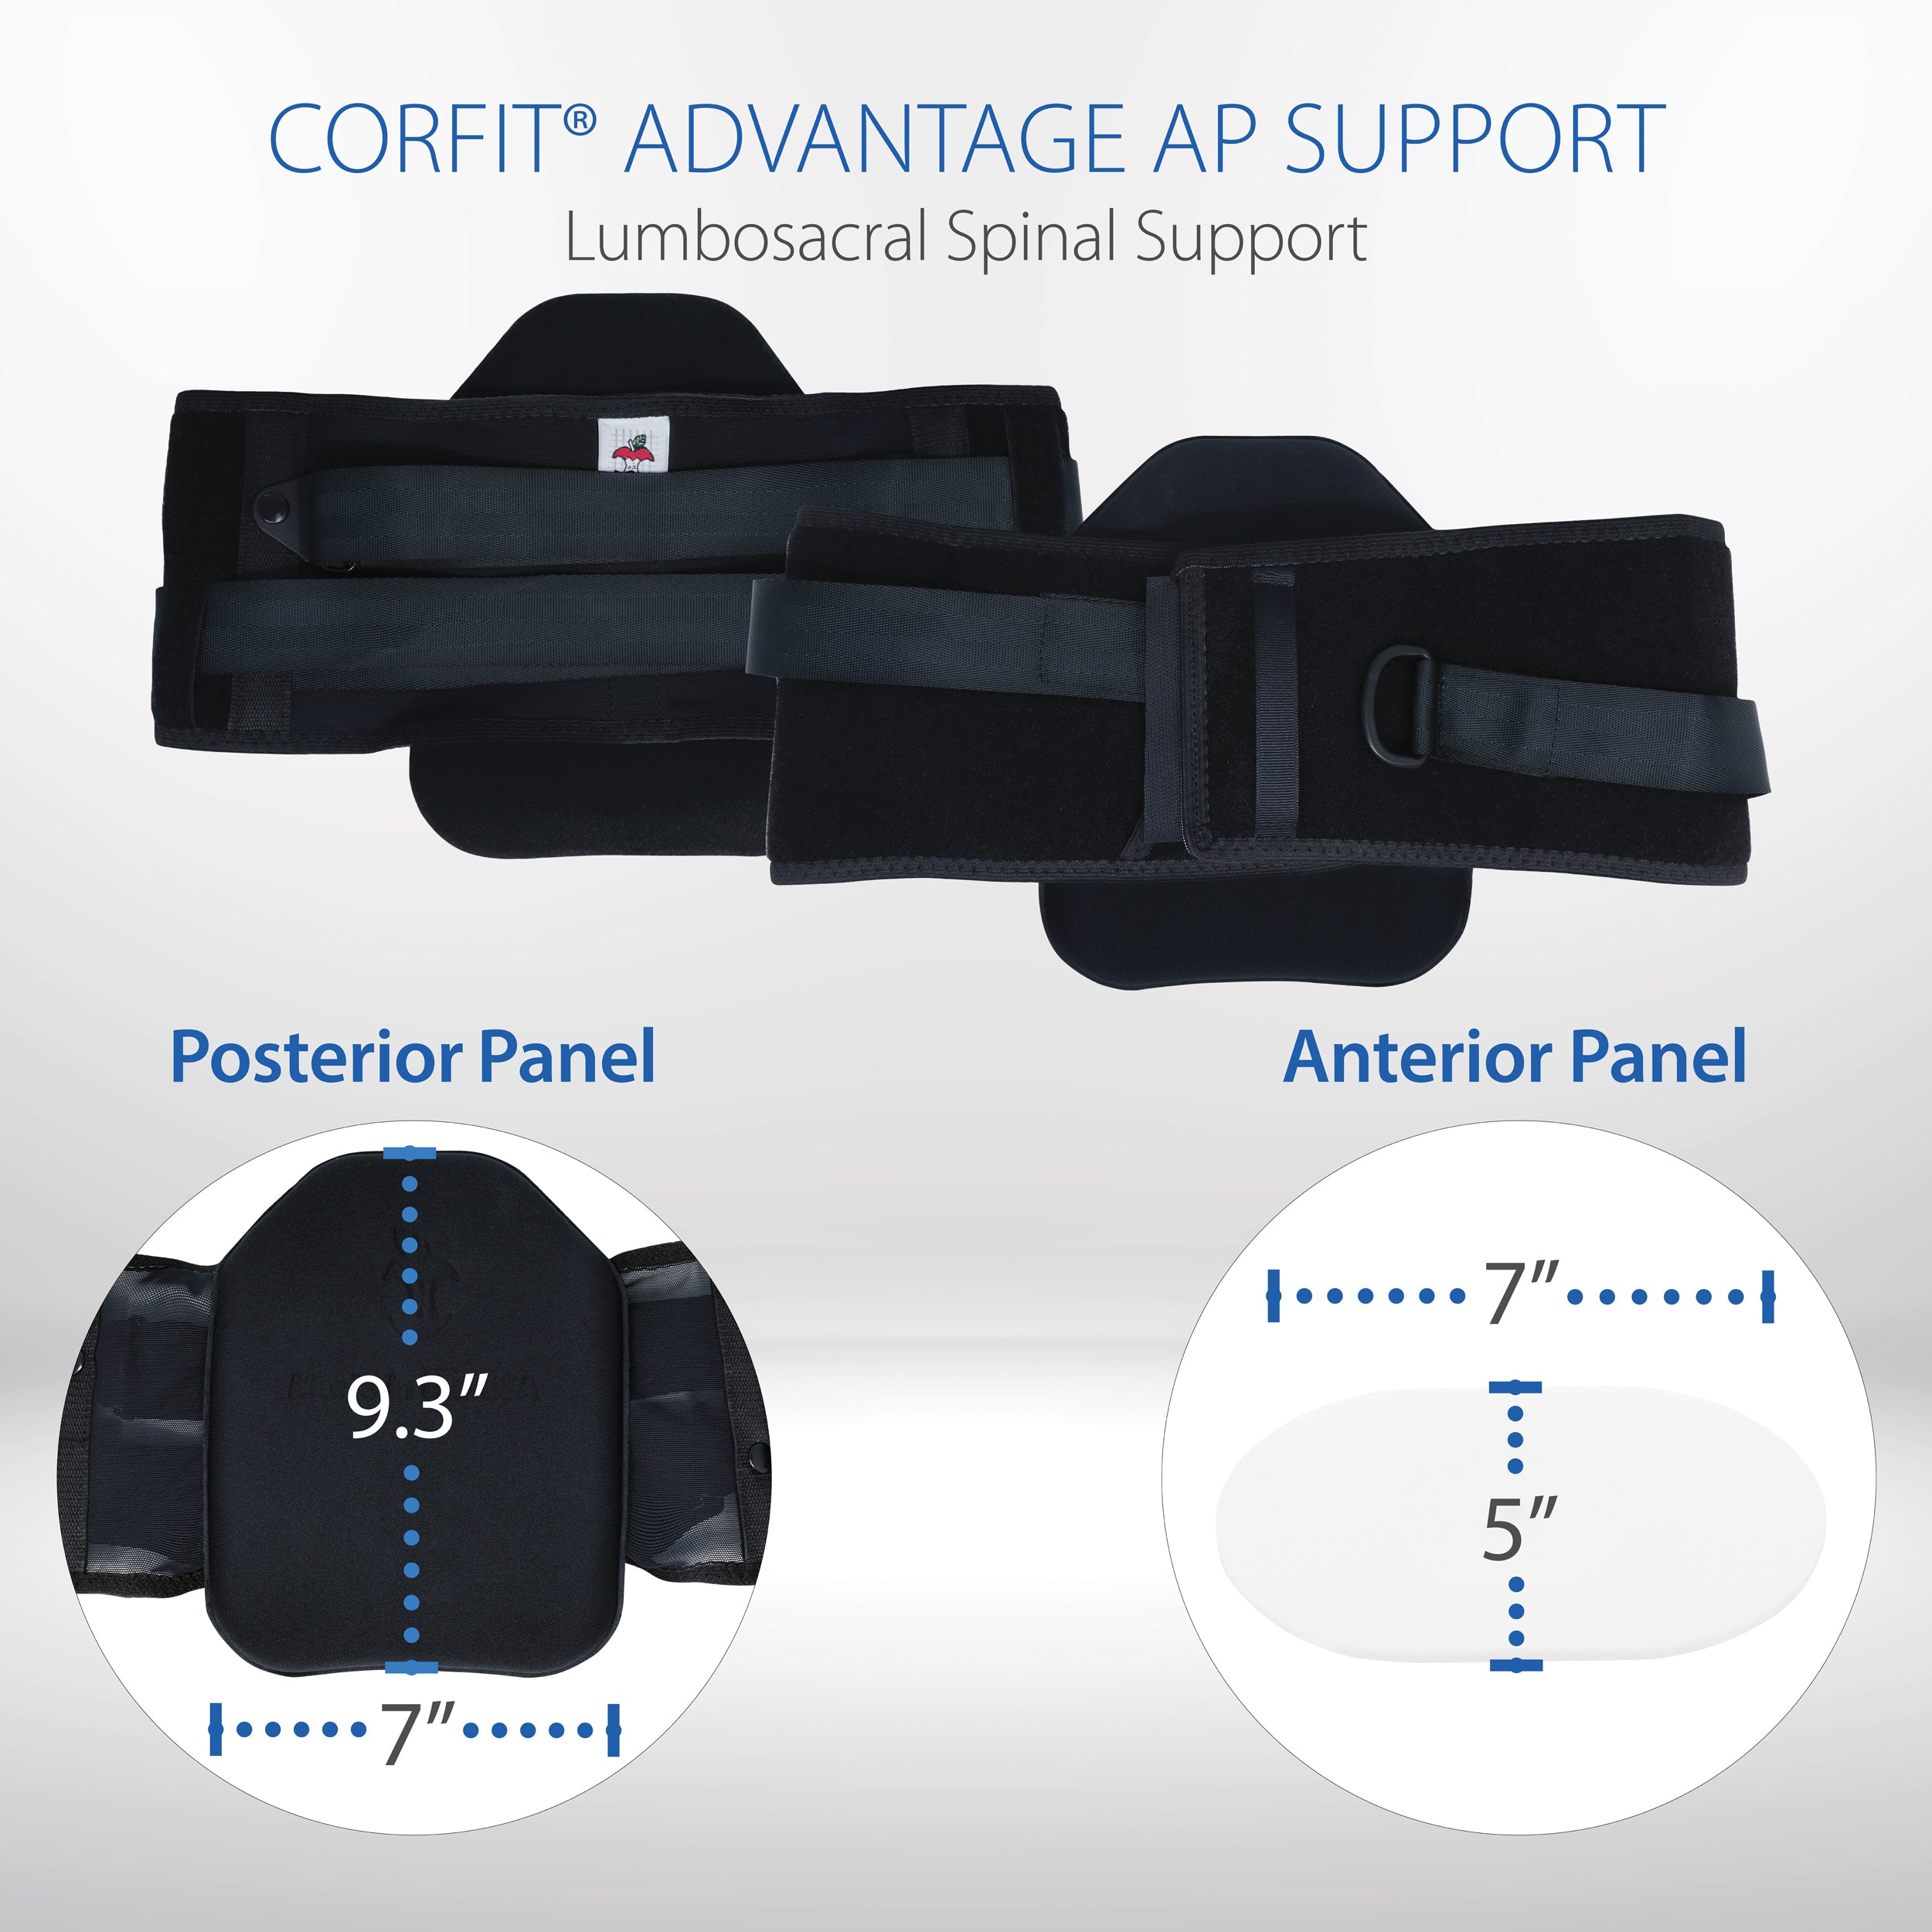 CorFit Advantage AP Lumbosacral Spinal Support